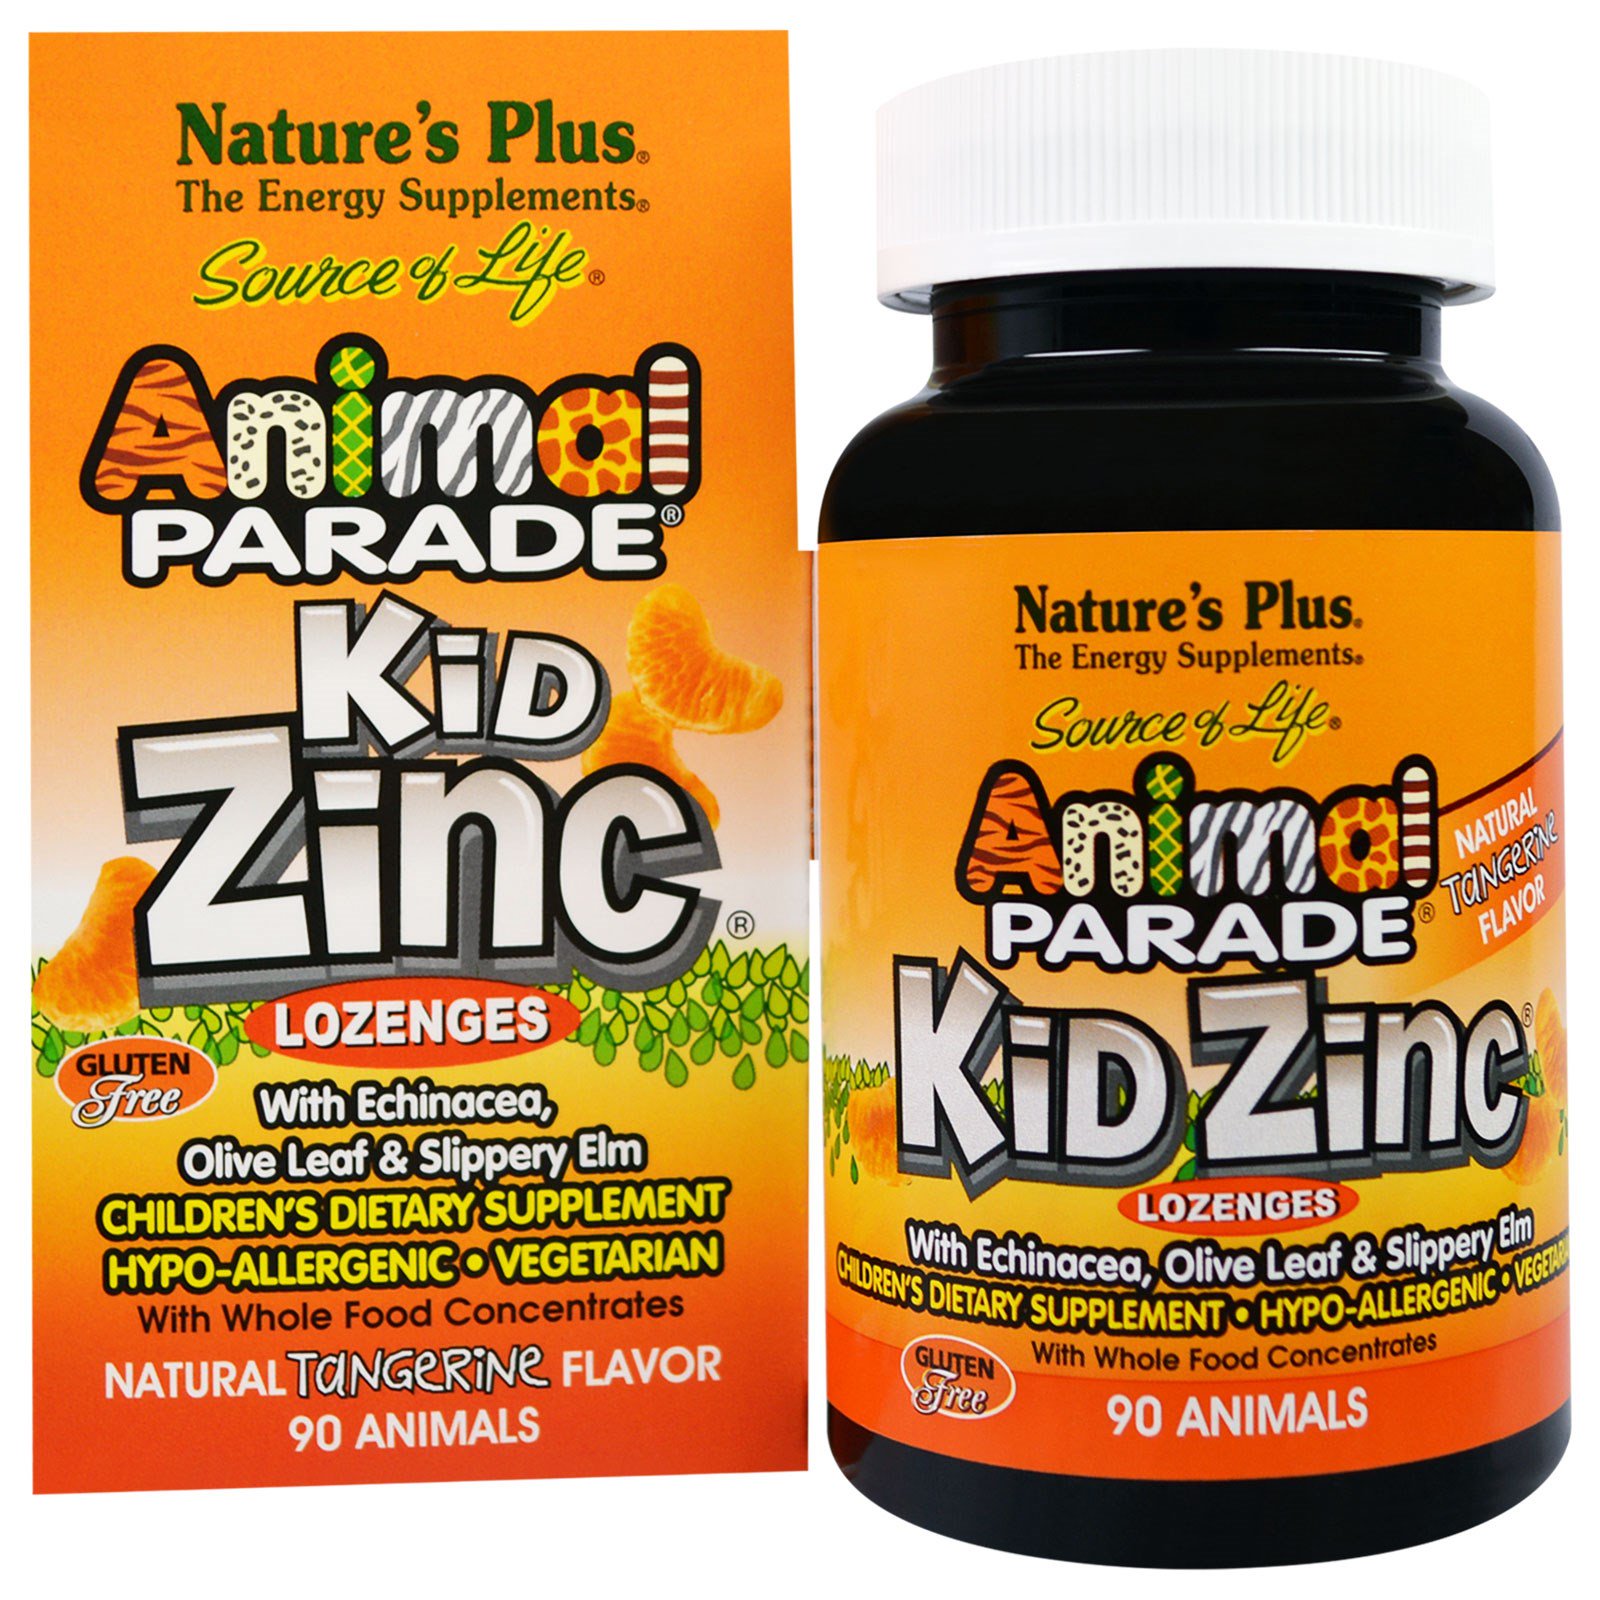 Nature's Plus Kid Zinc Lozenges, Natural Tangerine Flavor (90 Animals) - 